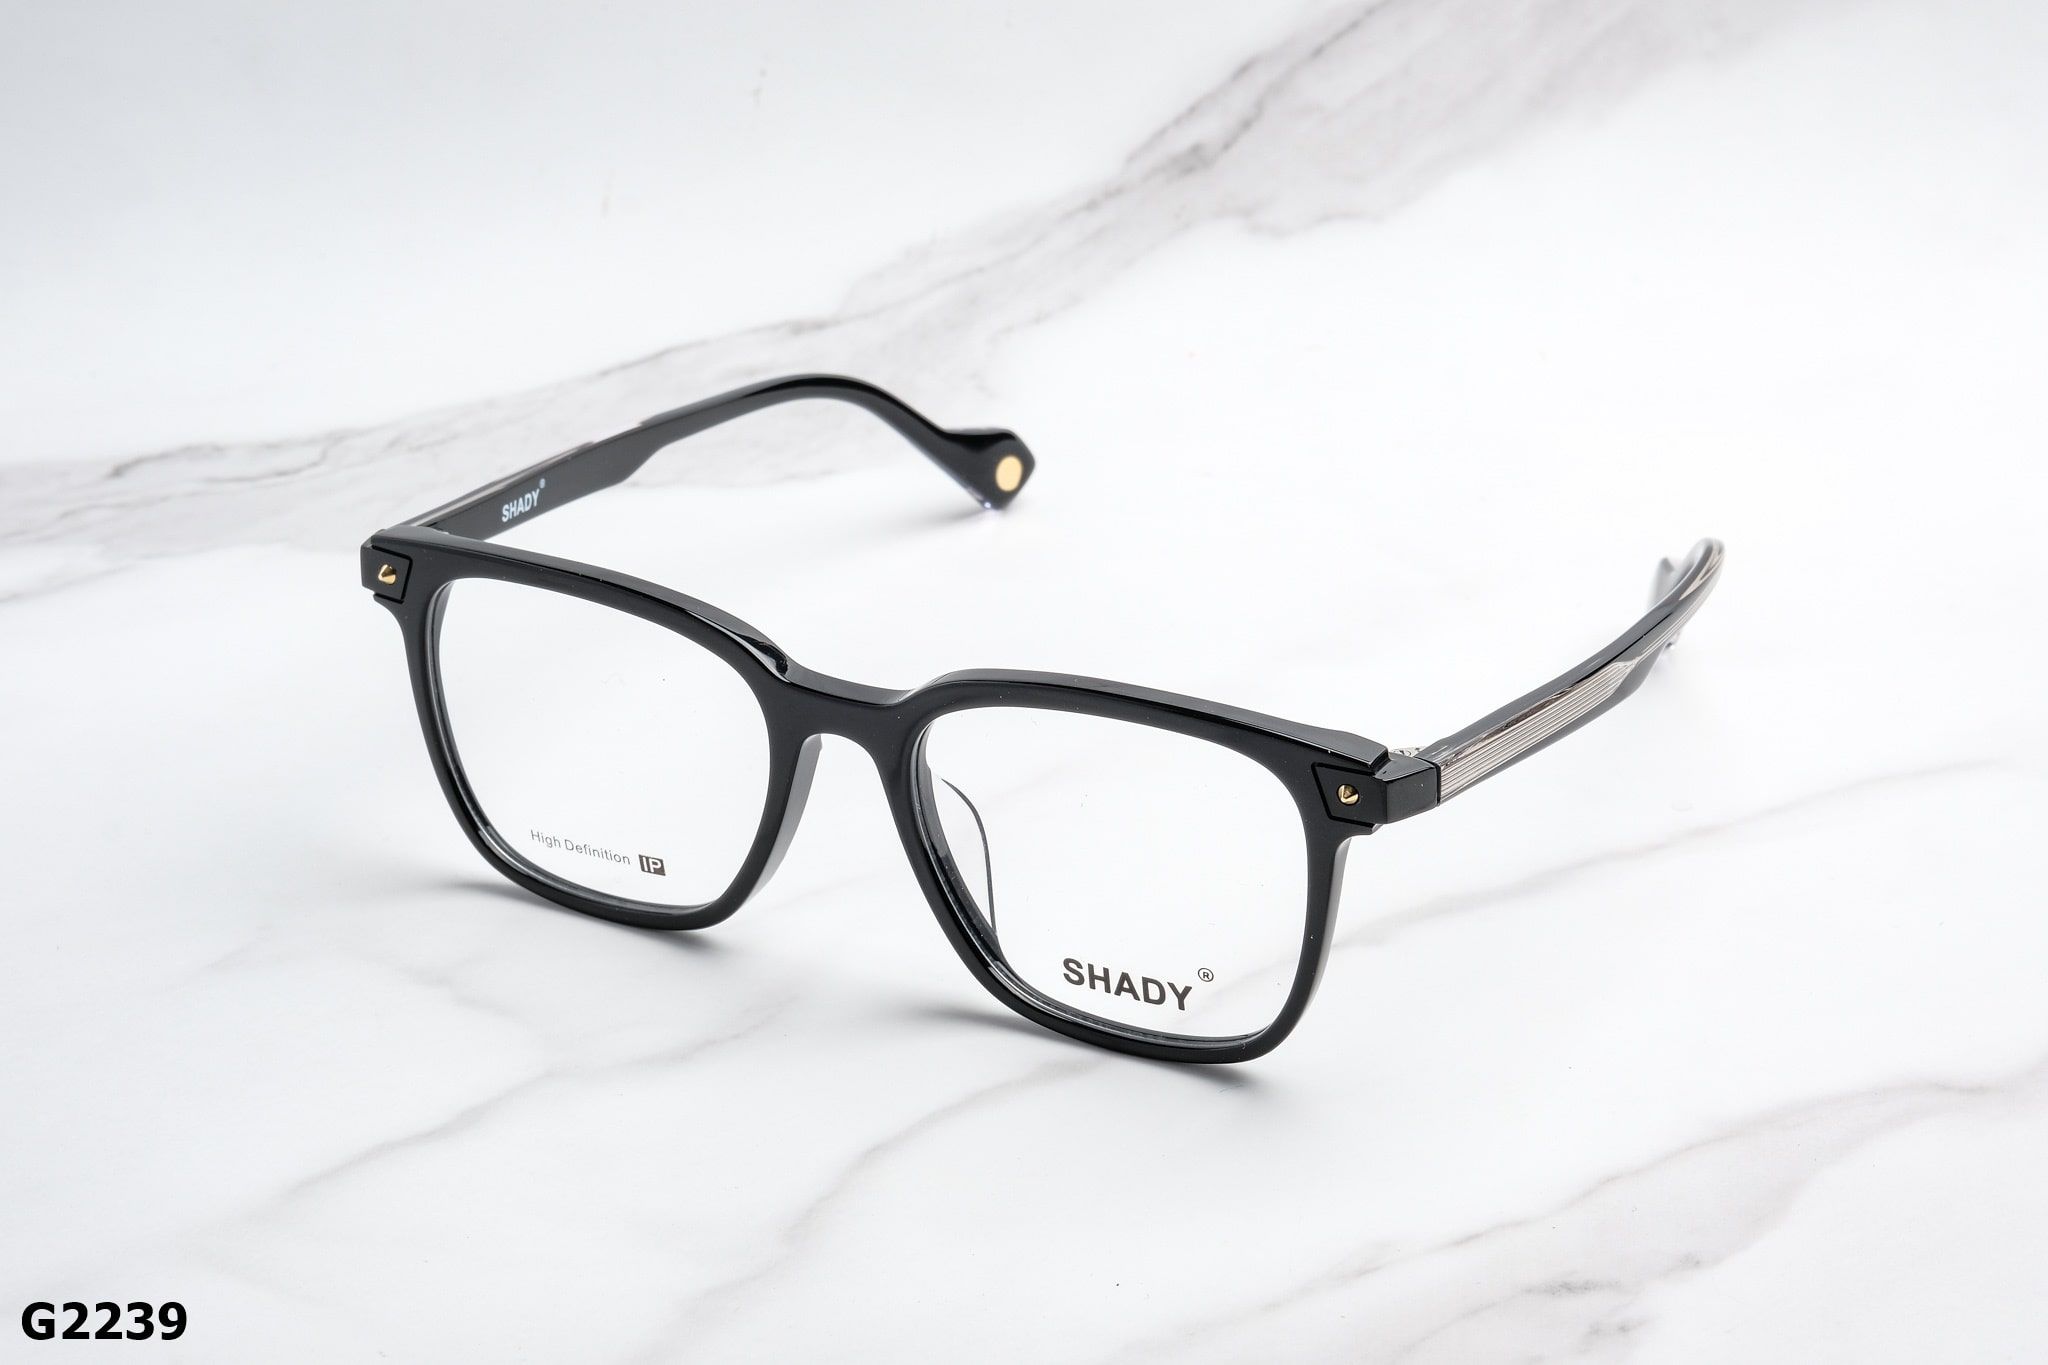  SHADY Eyewear - Glasses - G2239 